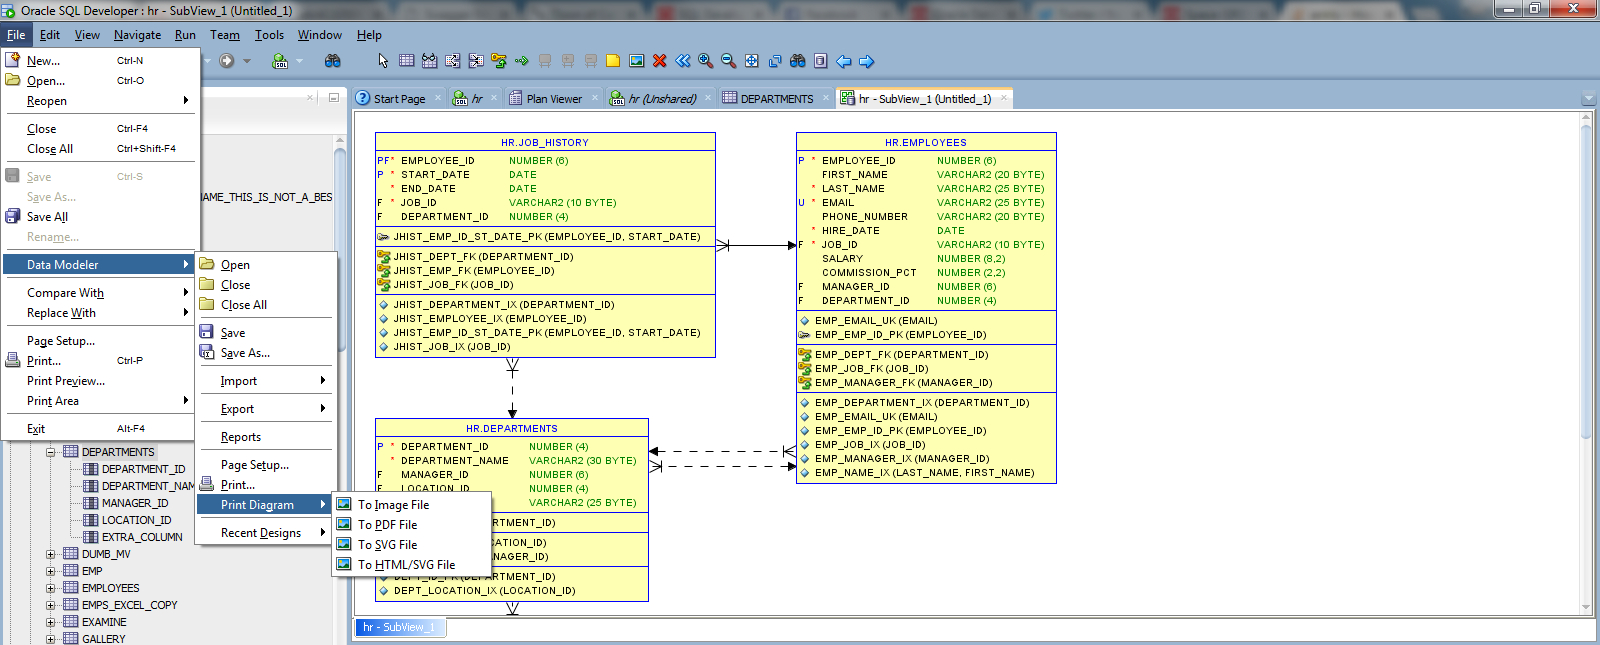 How To Export Erd Diagram To Image In Oracle Data Modeler regarding Er Diagram In Sql Developer